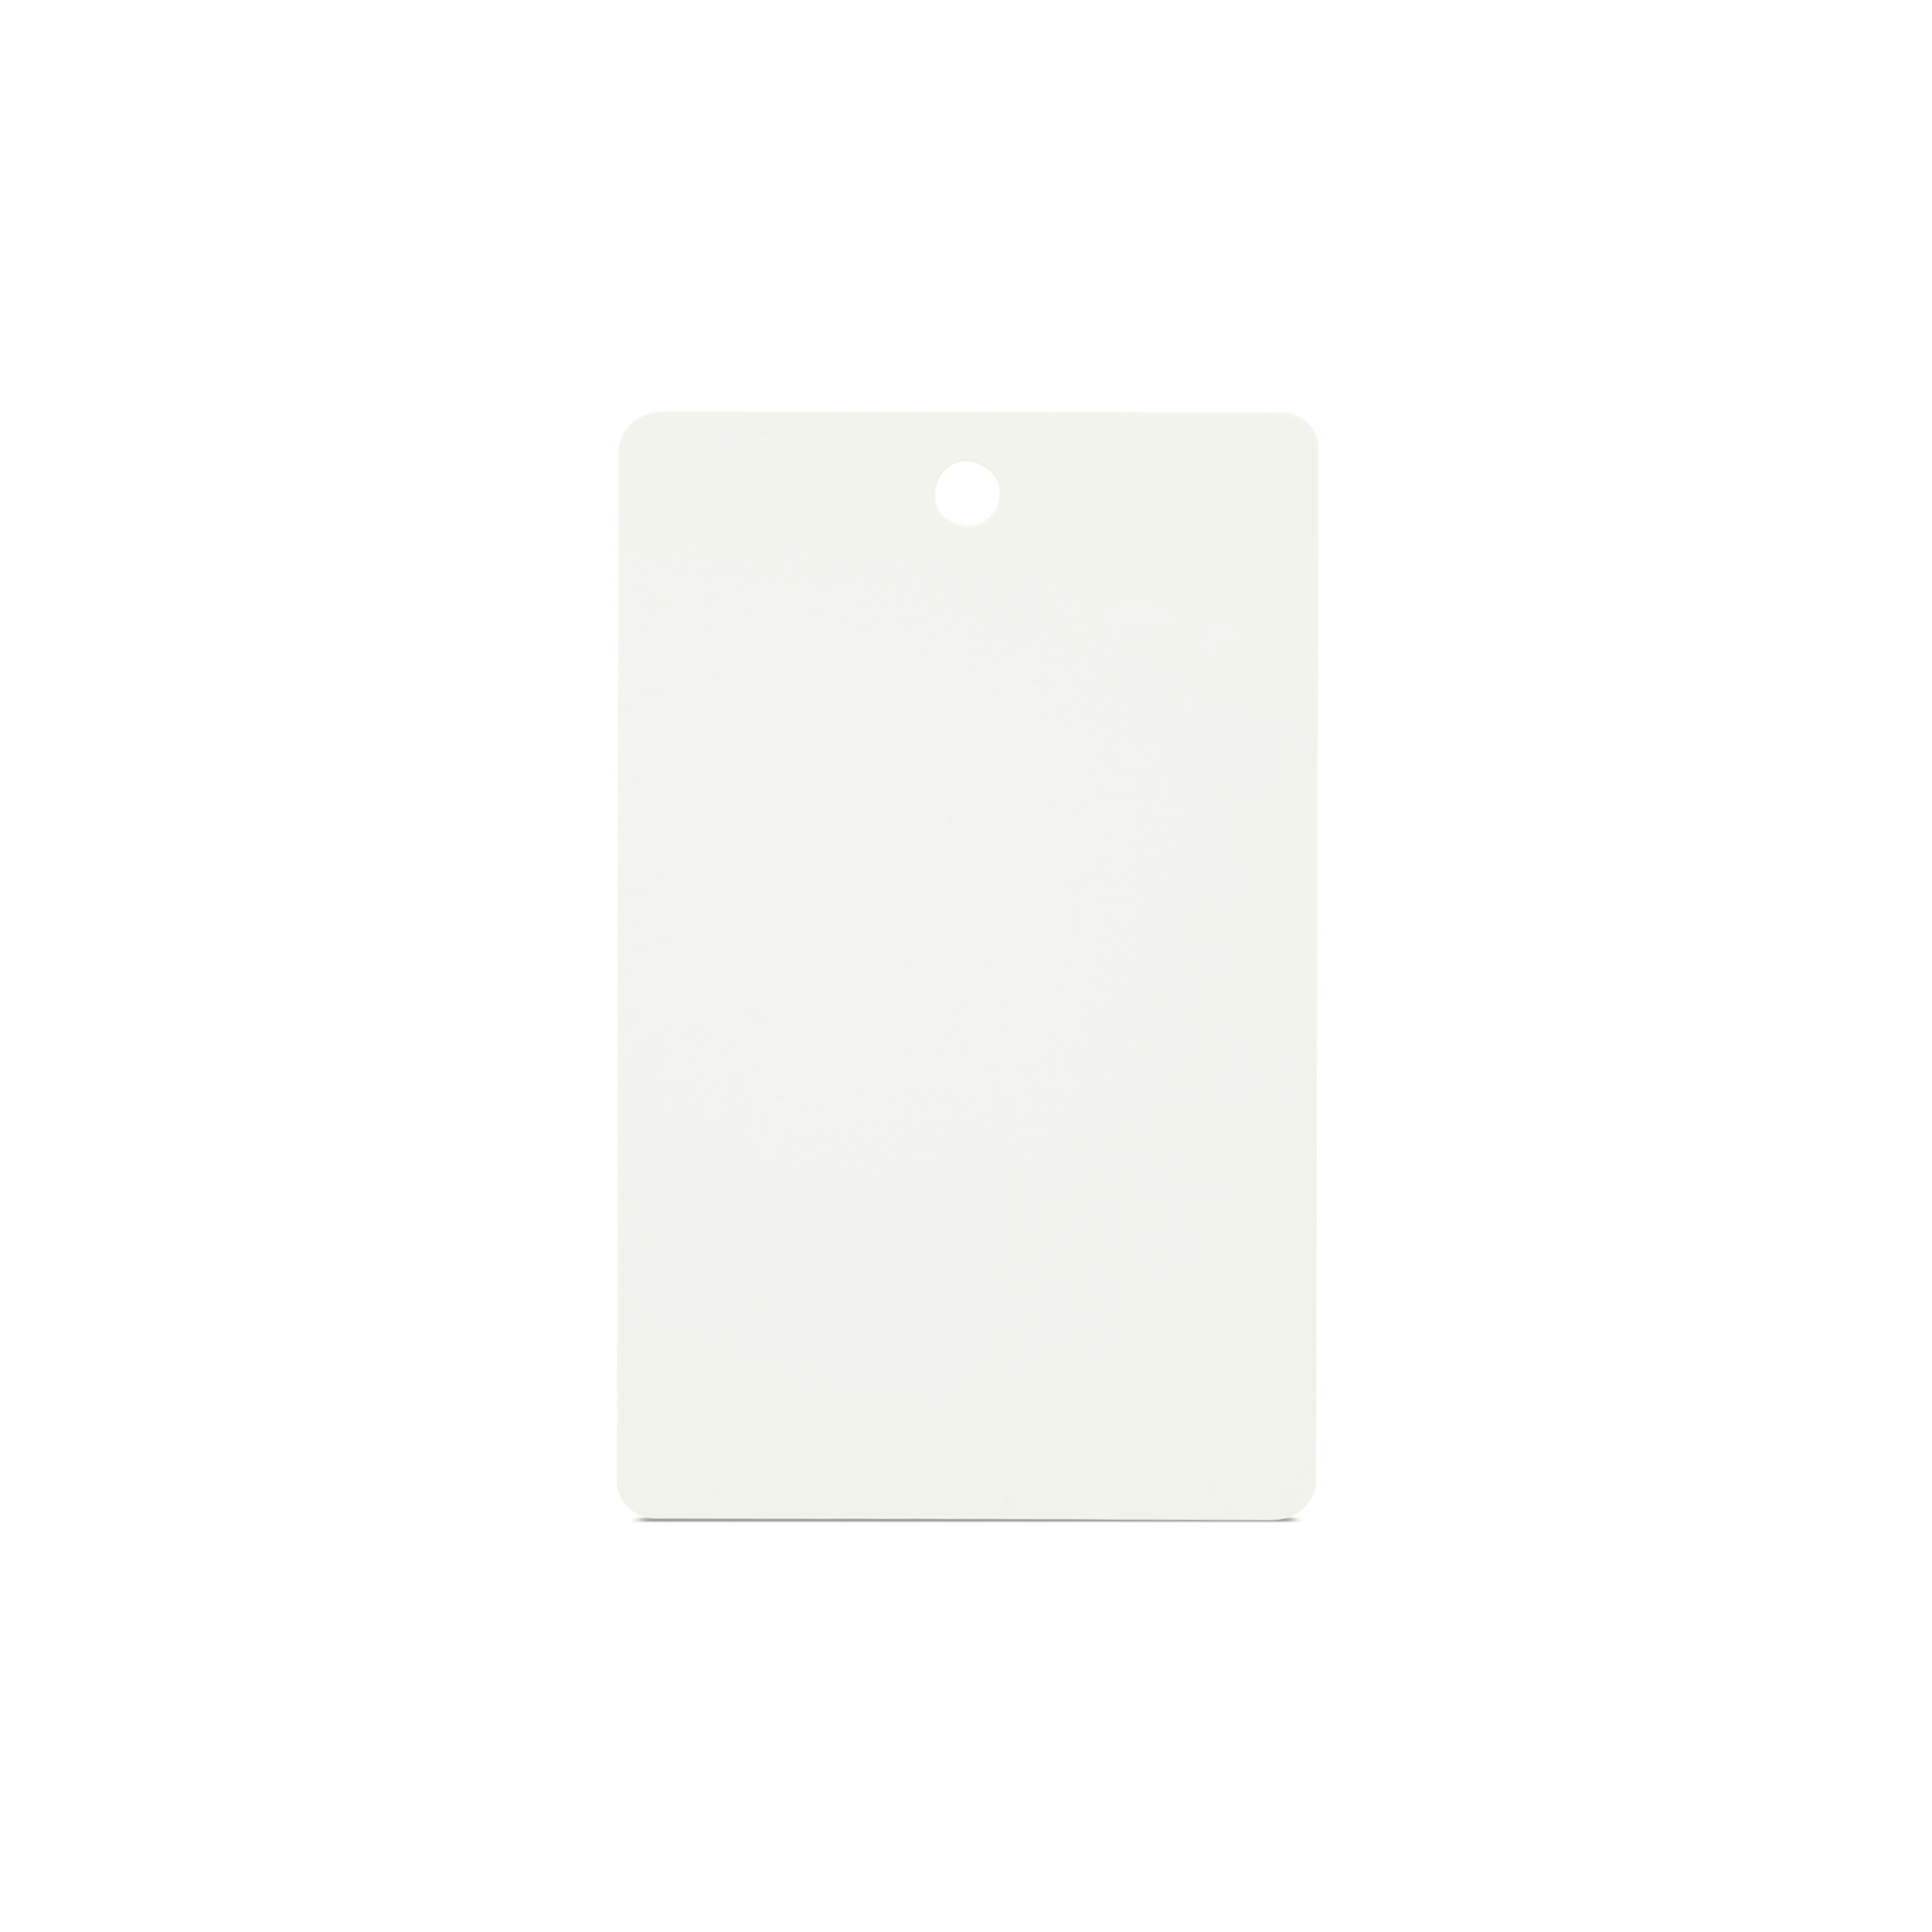 NFC Karte PVC - 85,6 x 54 mm - NTAG213 - 180 Byte - weiß - Hochformat gelocht